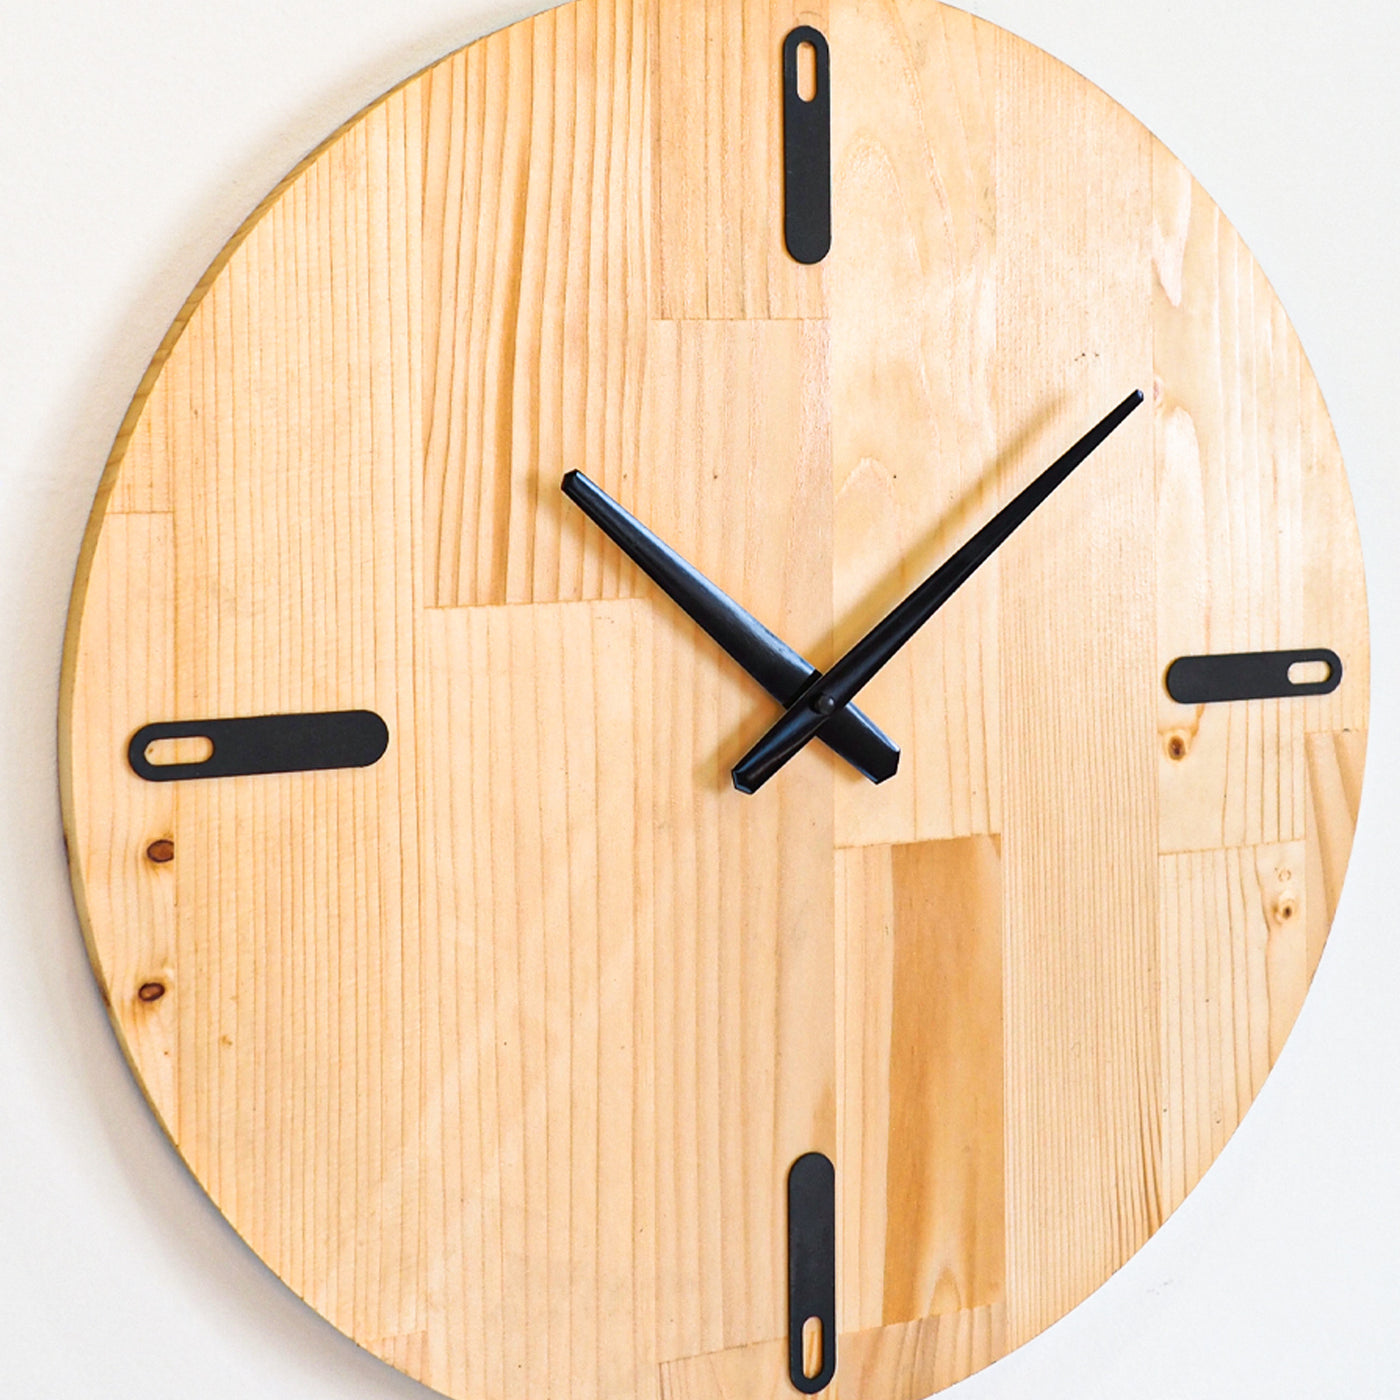 Nature Wooden Wall Clock